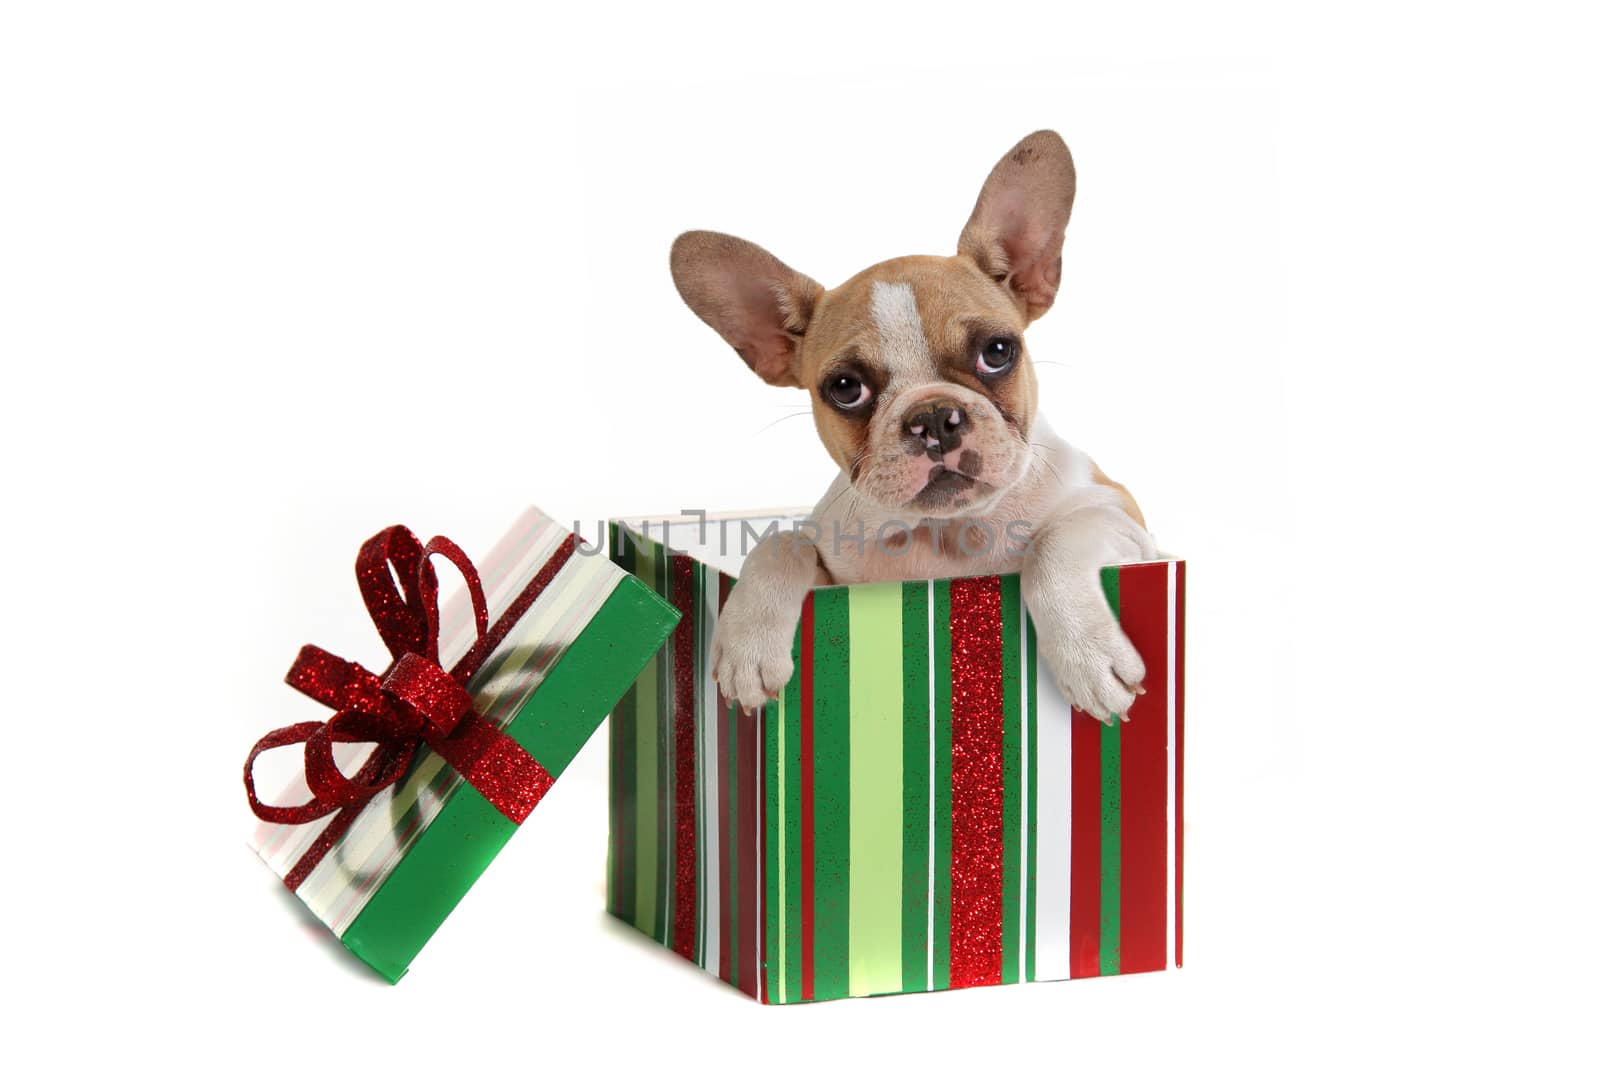 Dog Inside a Christmas Gift  by tobkatrina